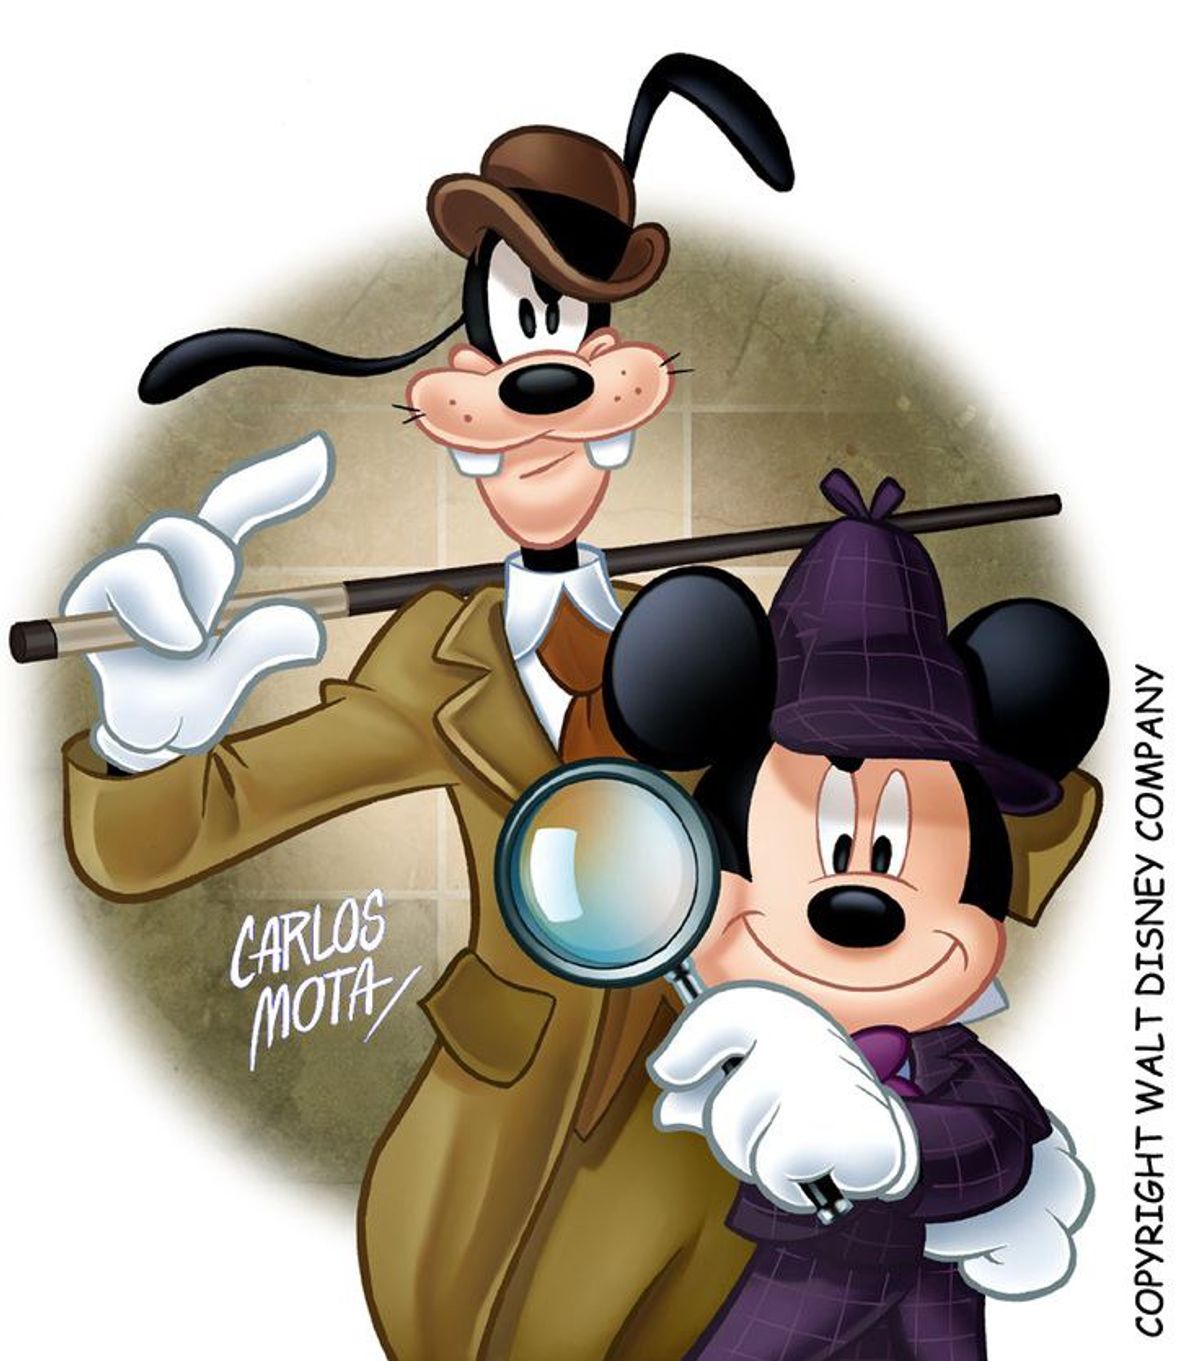 The Disney Conspiracy: The Hidden Mickeys (Part 1 of 3)